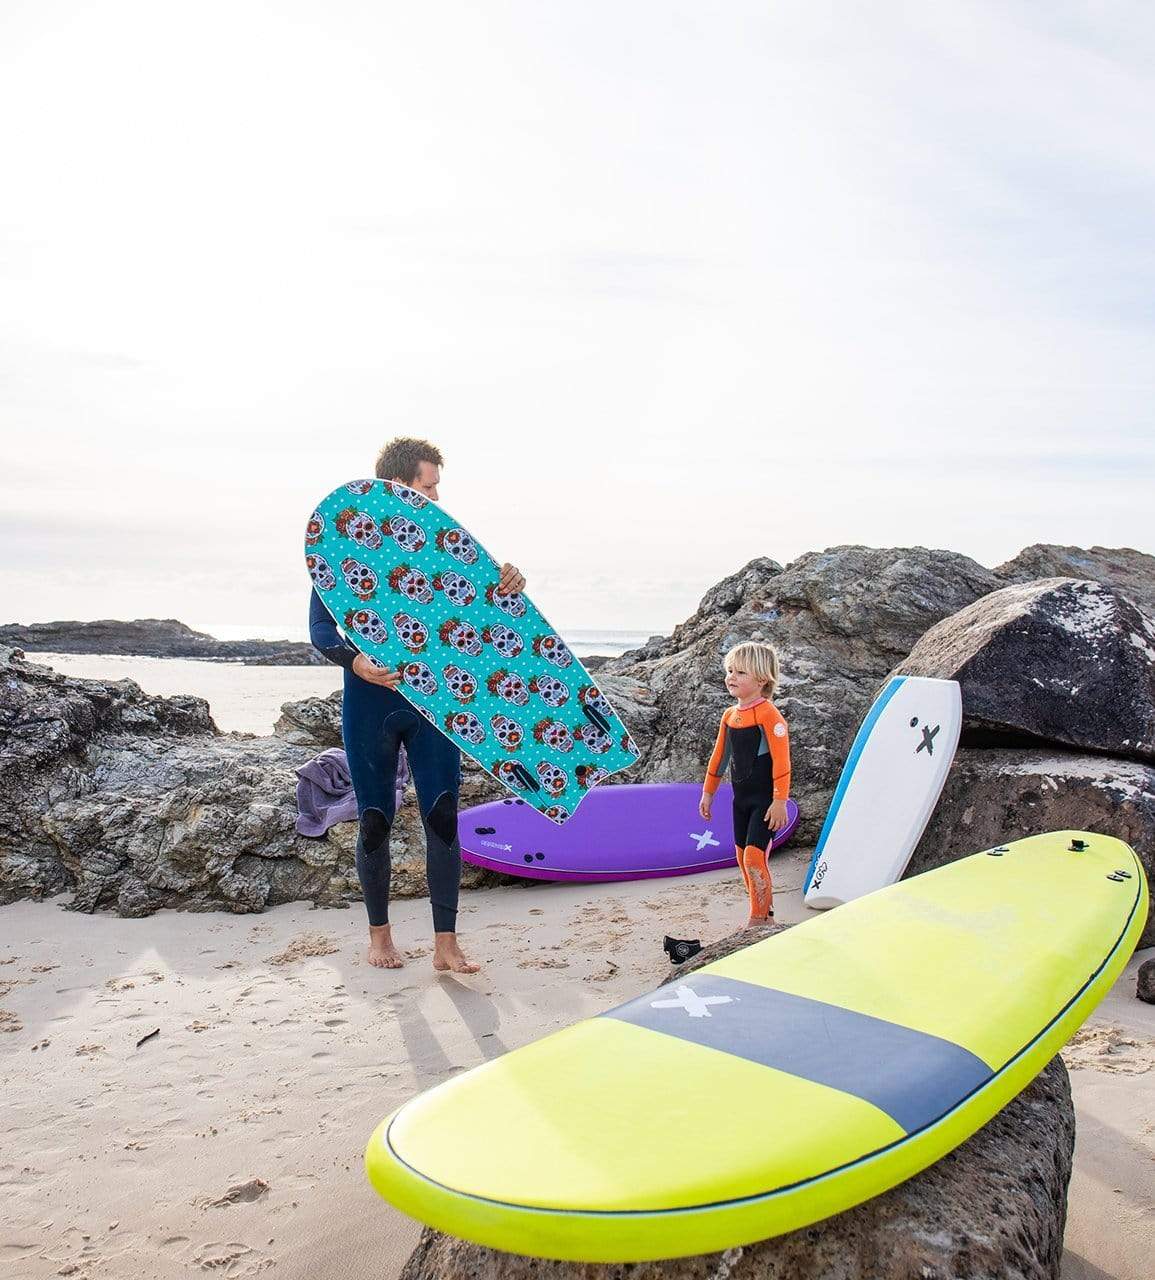 Random X Twin Foam Surfboard 54" surf Coastline International